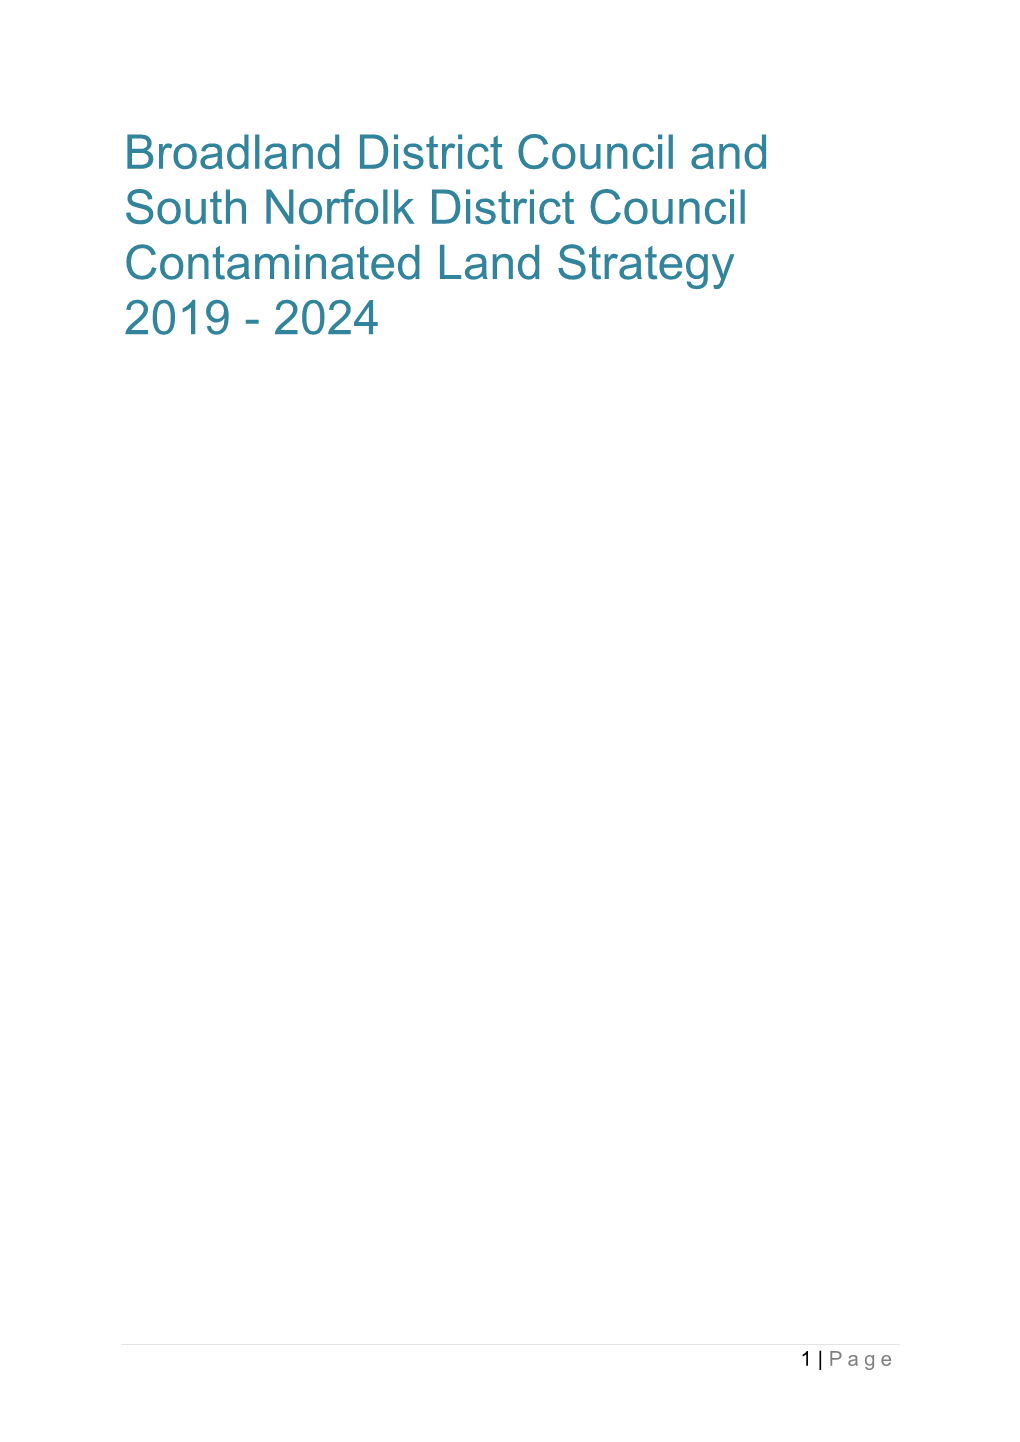 Contaminated Land Strategy 2019 - 2024